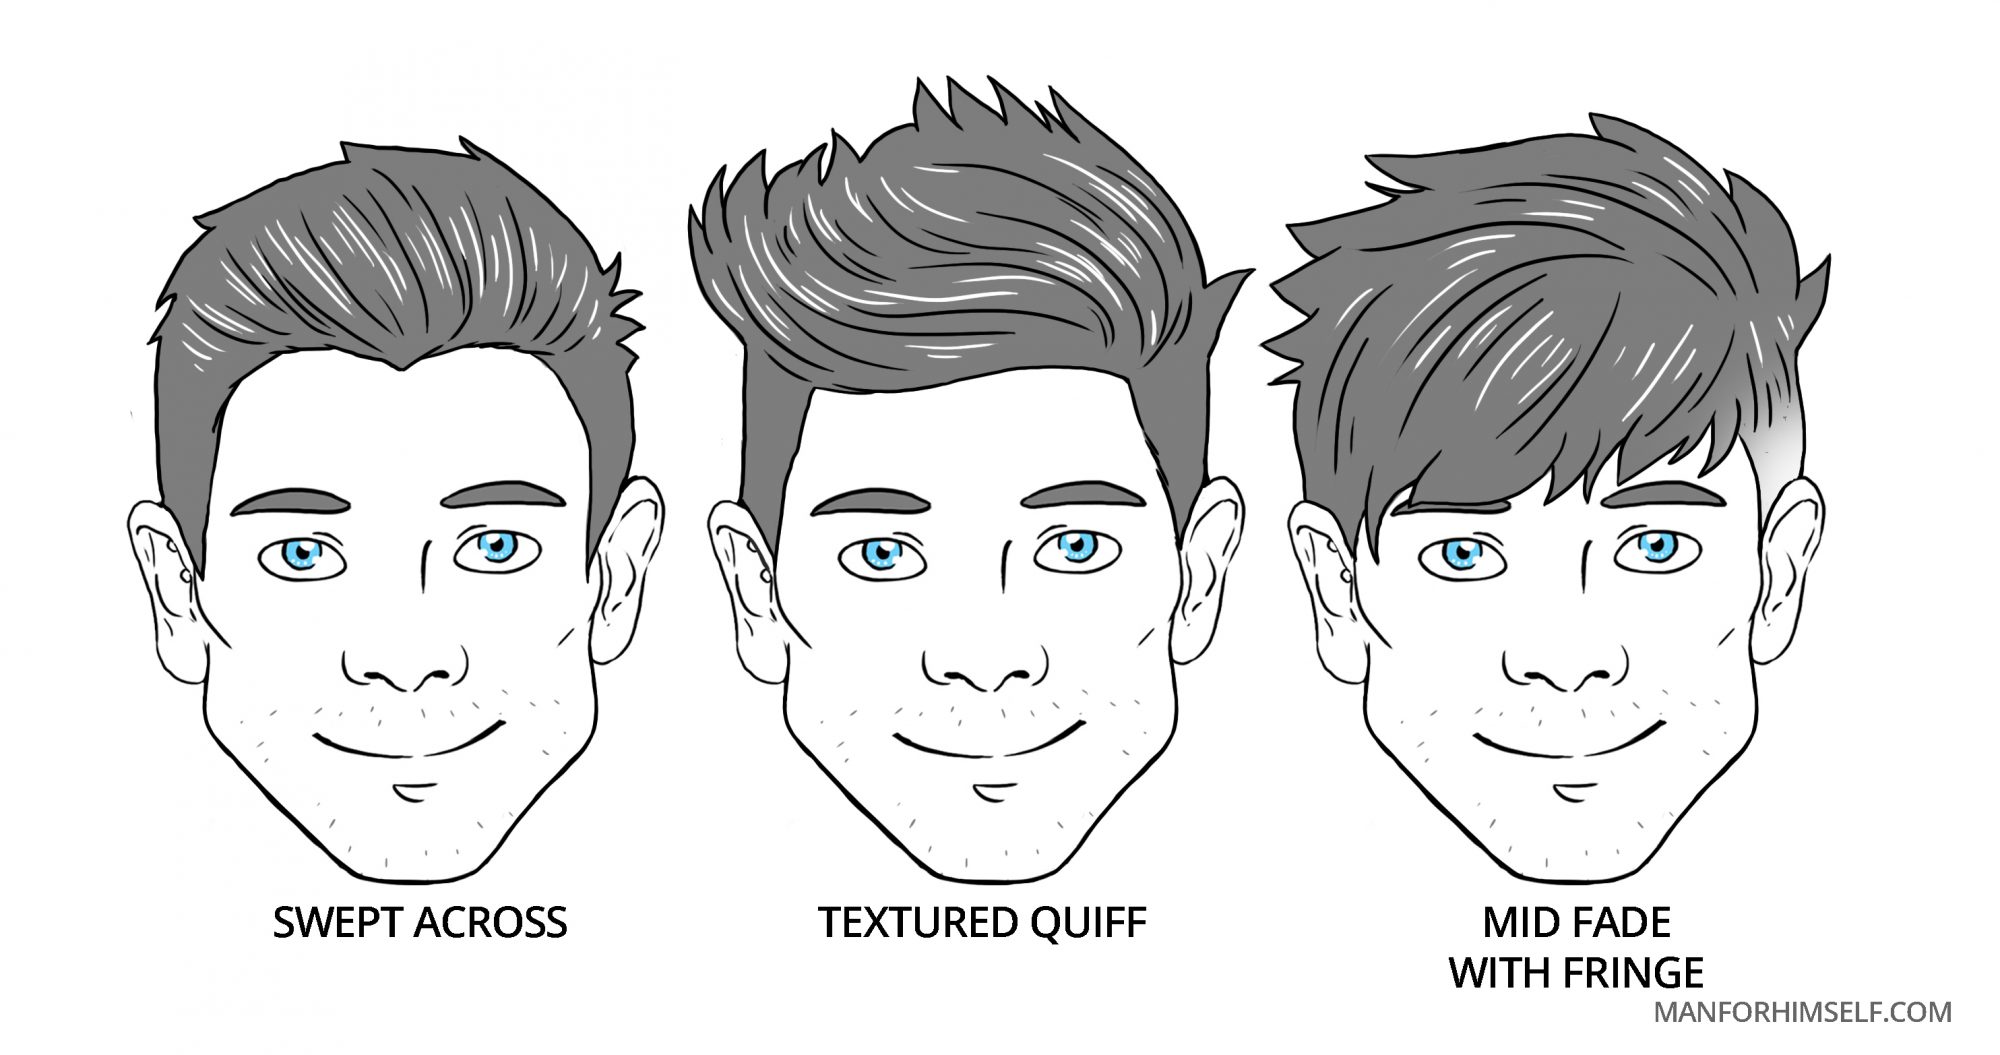 best hairstyles for diamond face shape men | diamond hairstyle | diamond face  hairstyles men in 2022 - YouTube